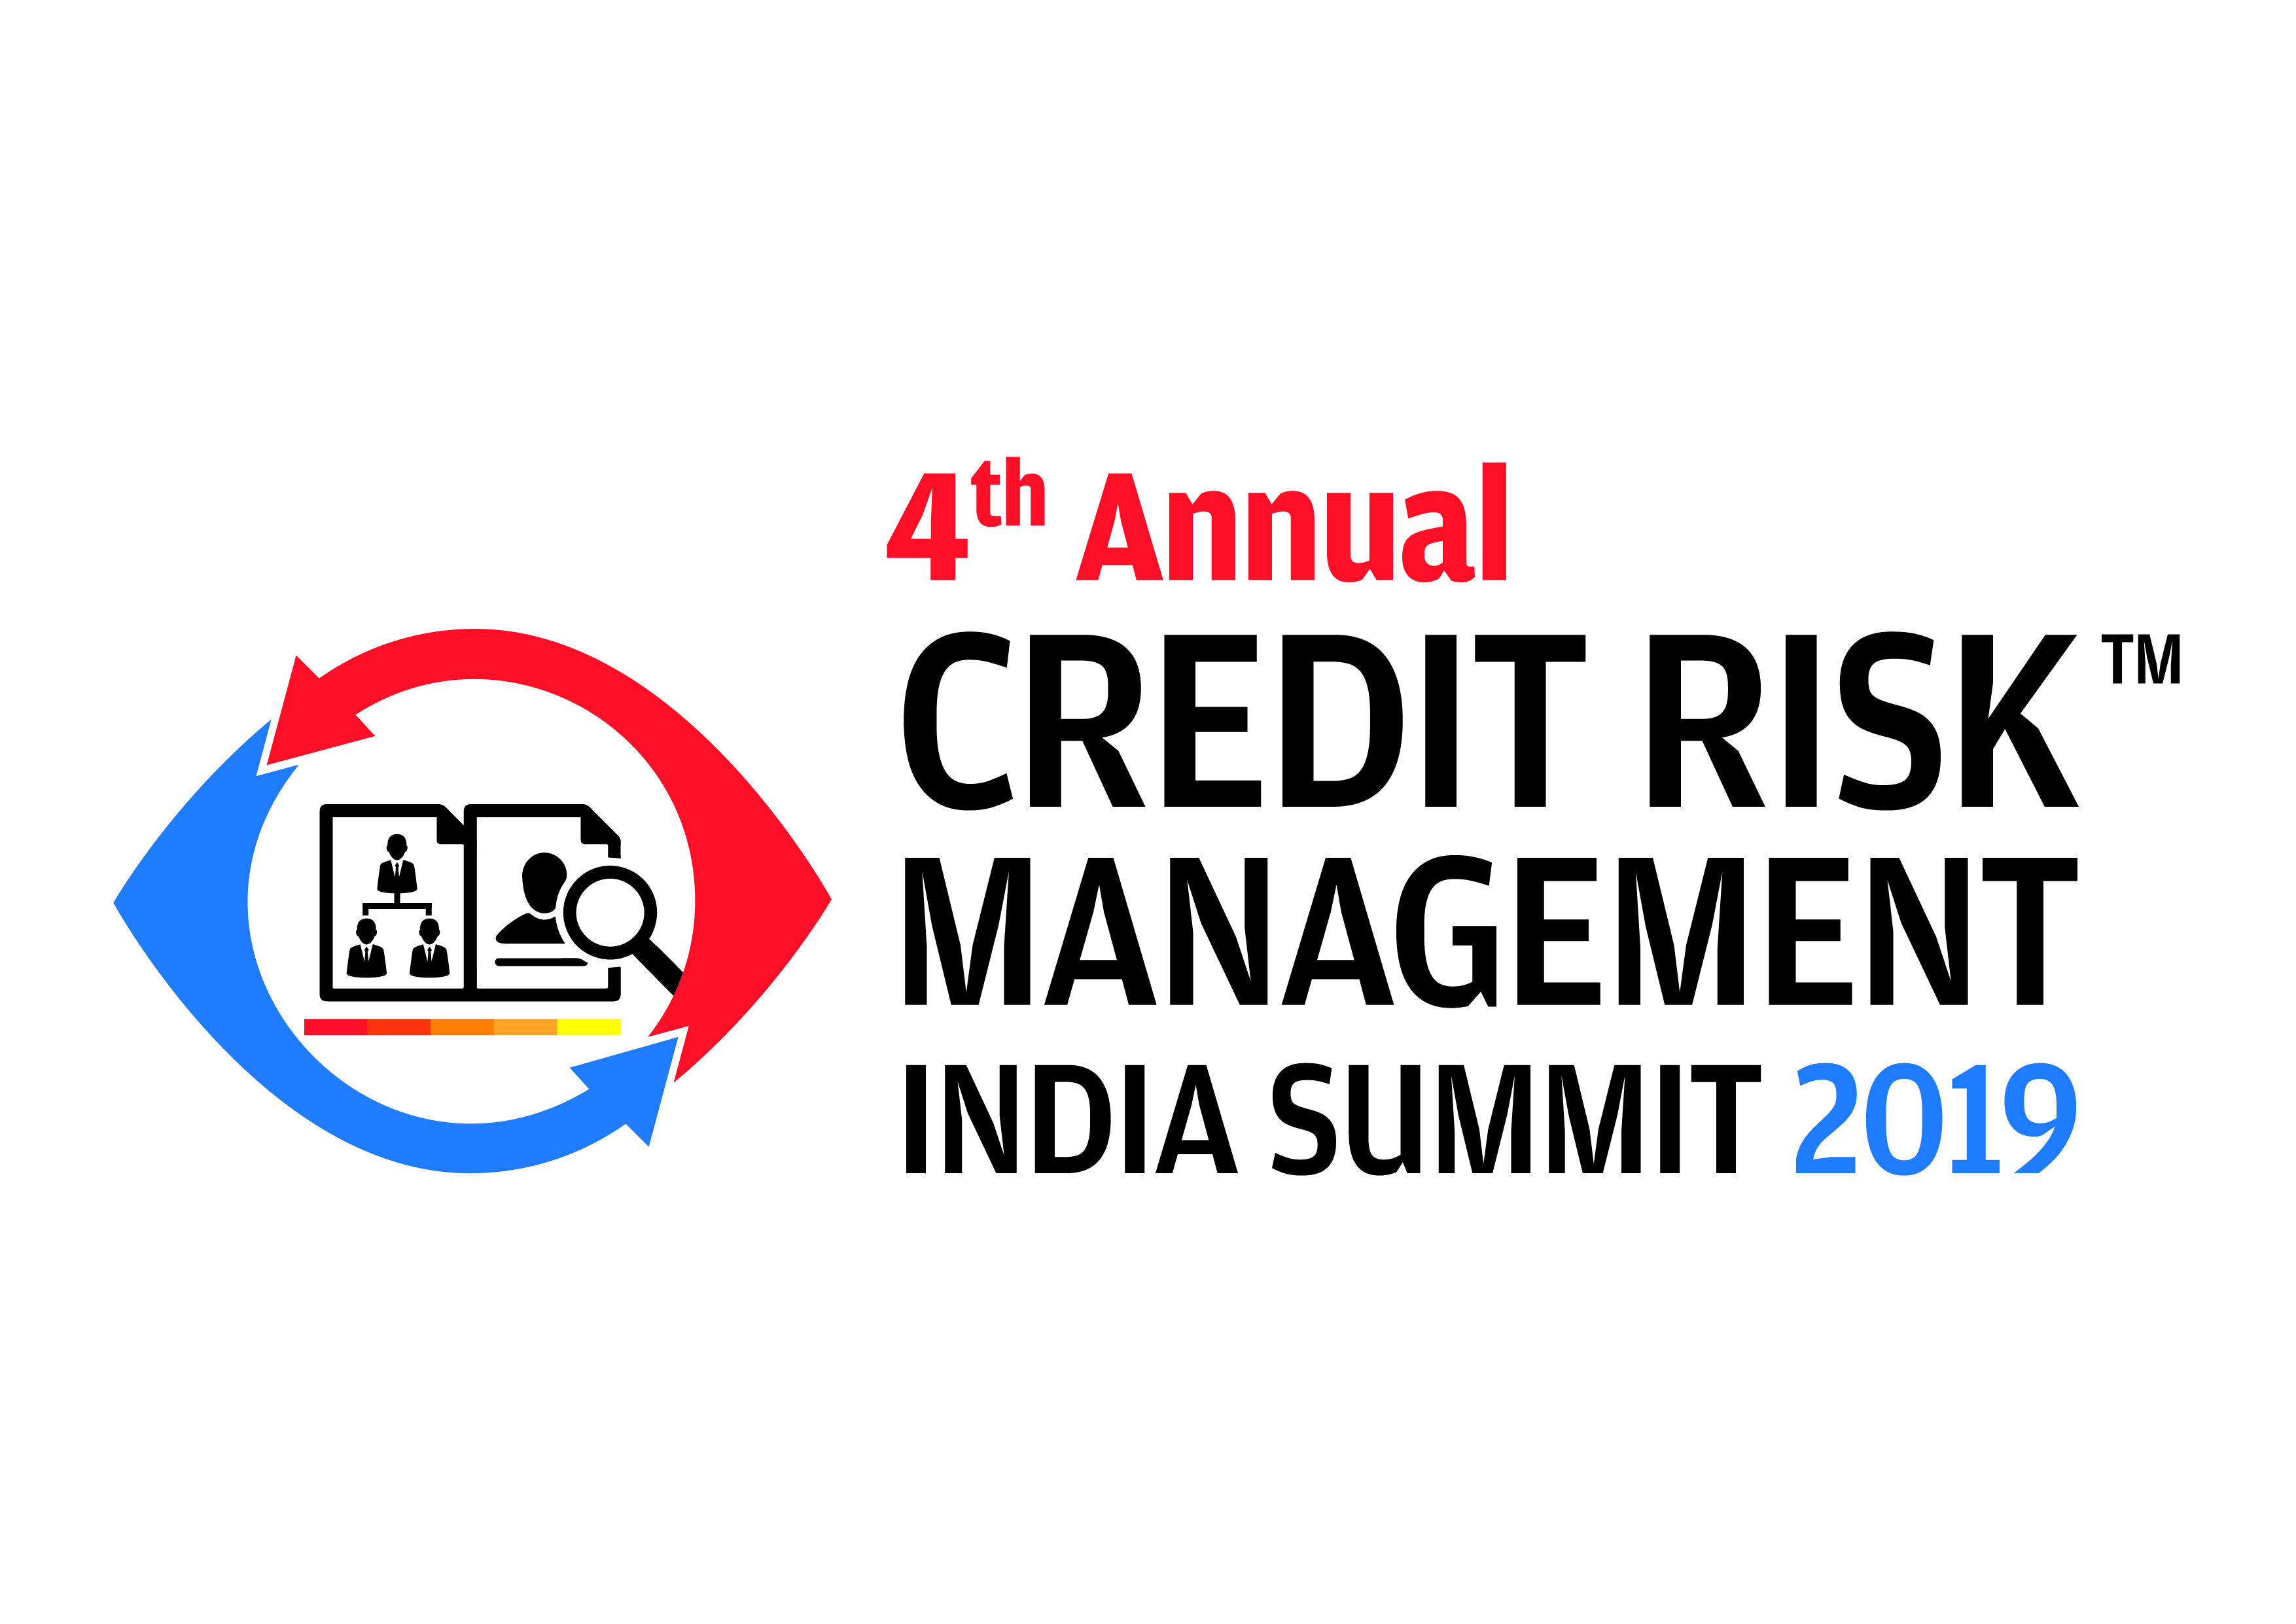 4th Annual Credit Risk Management India Summit 2019, Mumbai, Maharashtra, India